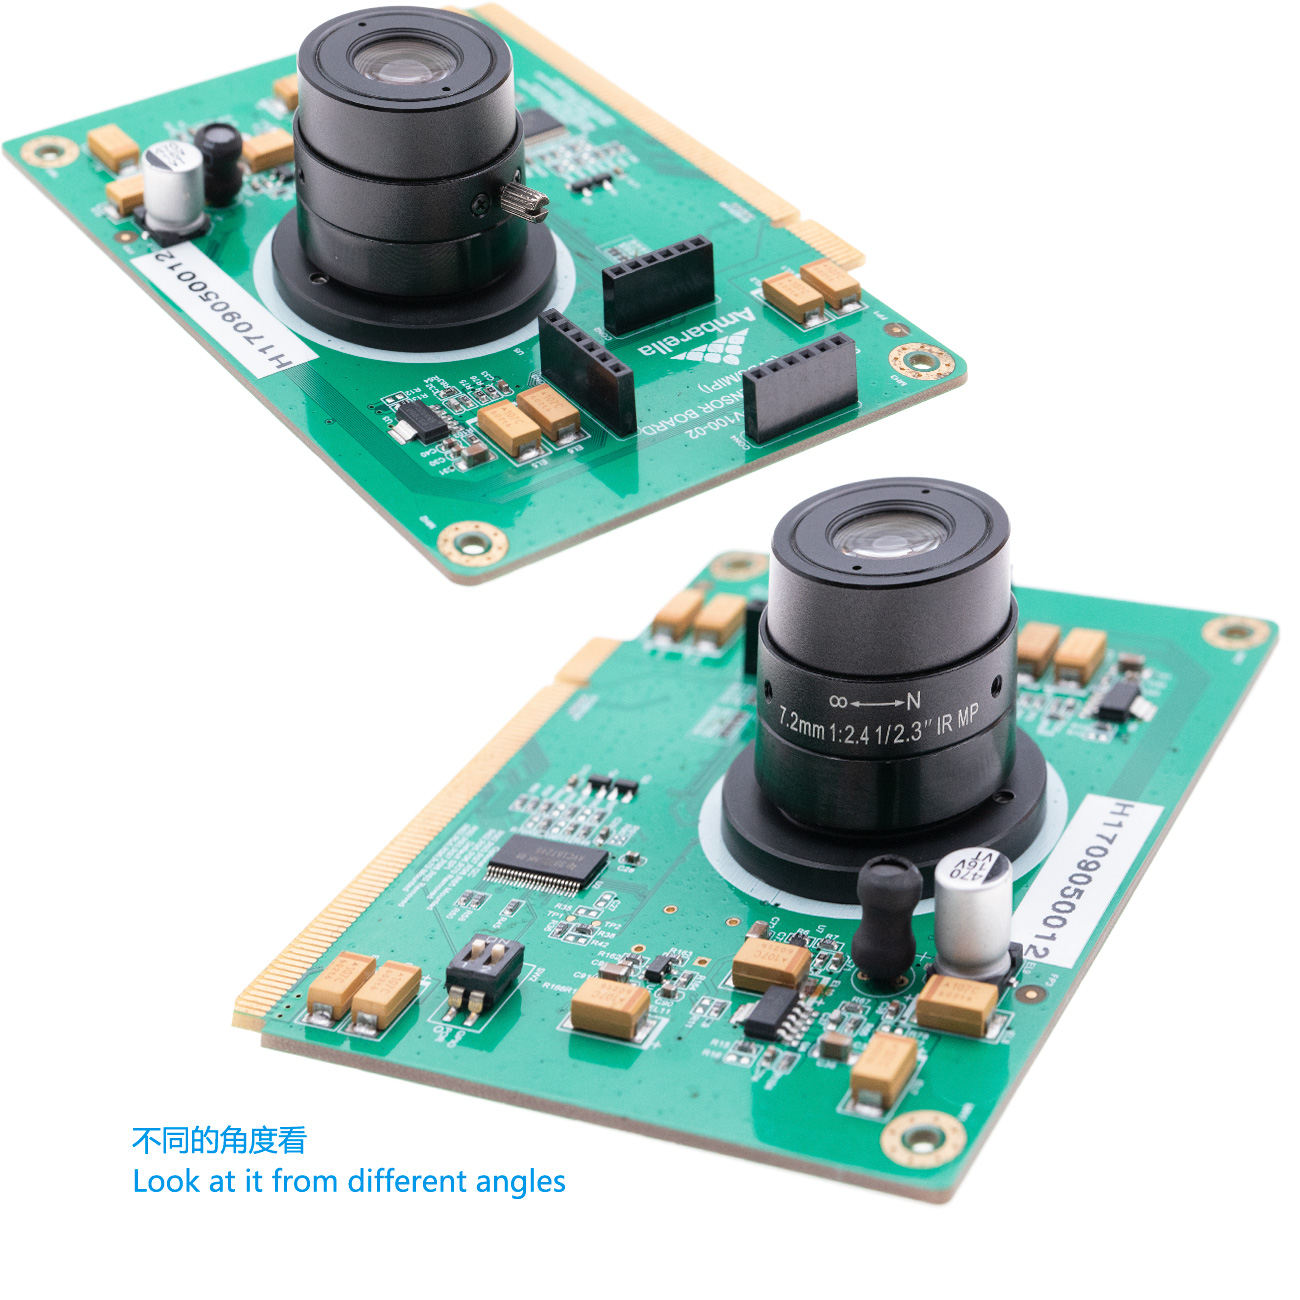 安霸Ambarella S3L开发板,开发板中的竖板，开发板的sensor板，Ambarella development board,IMX274 sensor board, LVDS/MIPI interface，带镜头sensor板，7.2mm 1:2.4 1/2.3-inch IR MP Lens，onbroad SN74AVC16T245，S3L01-S02-A-V100-02板子